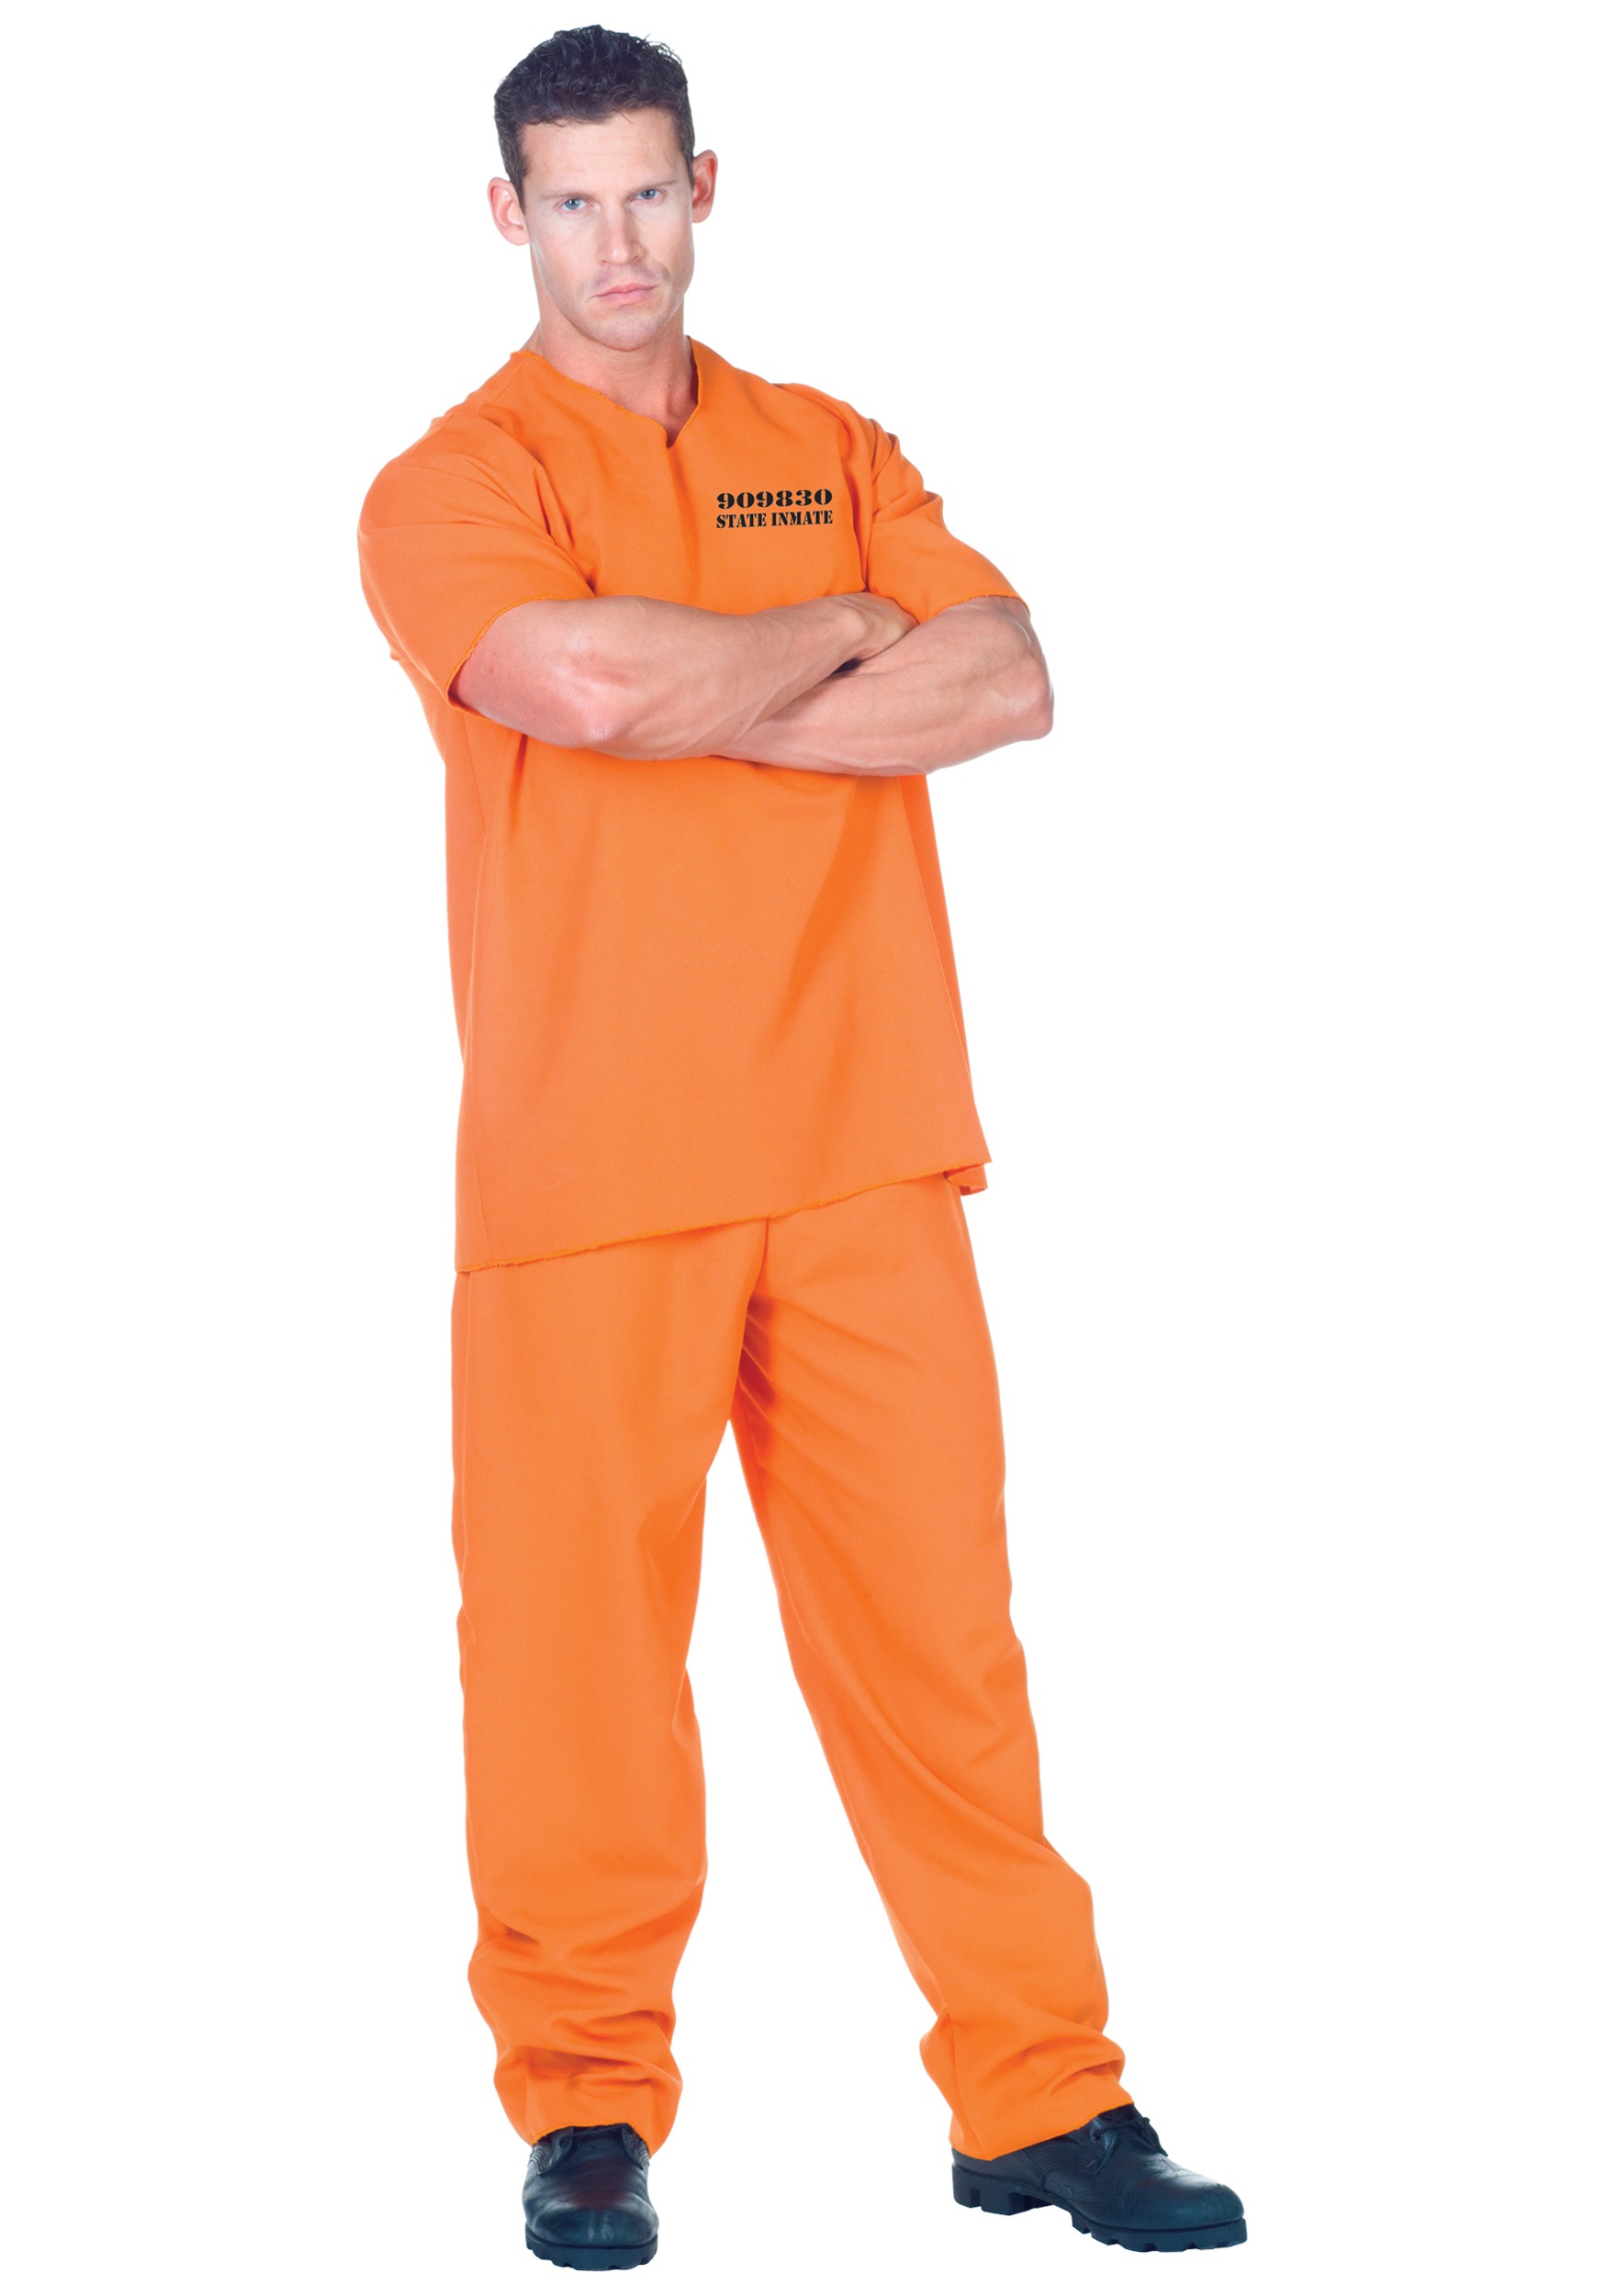 Public Offender Inmate Fancy Dress Costume For Men